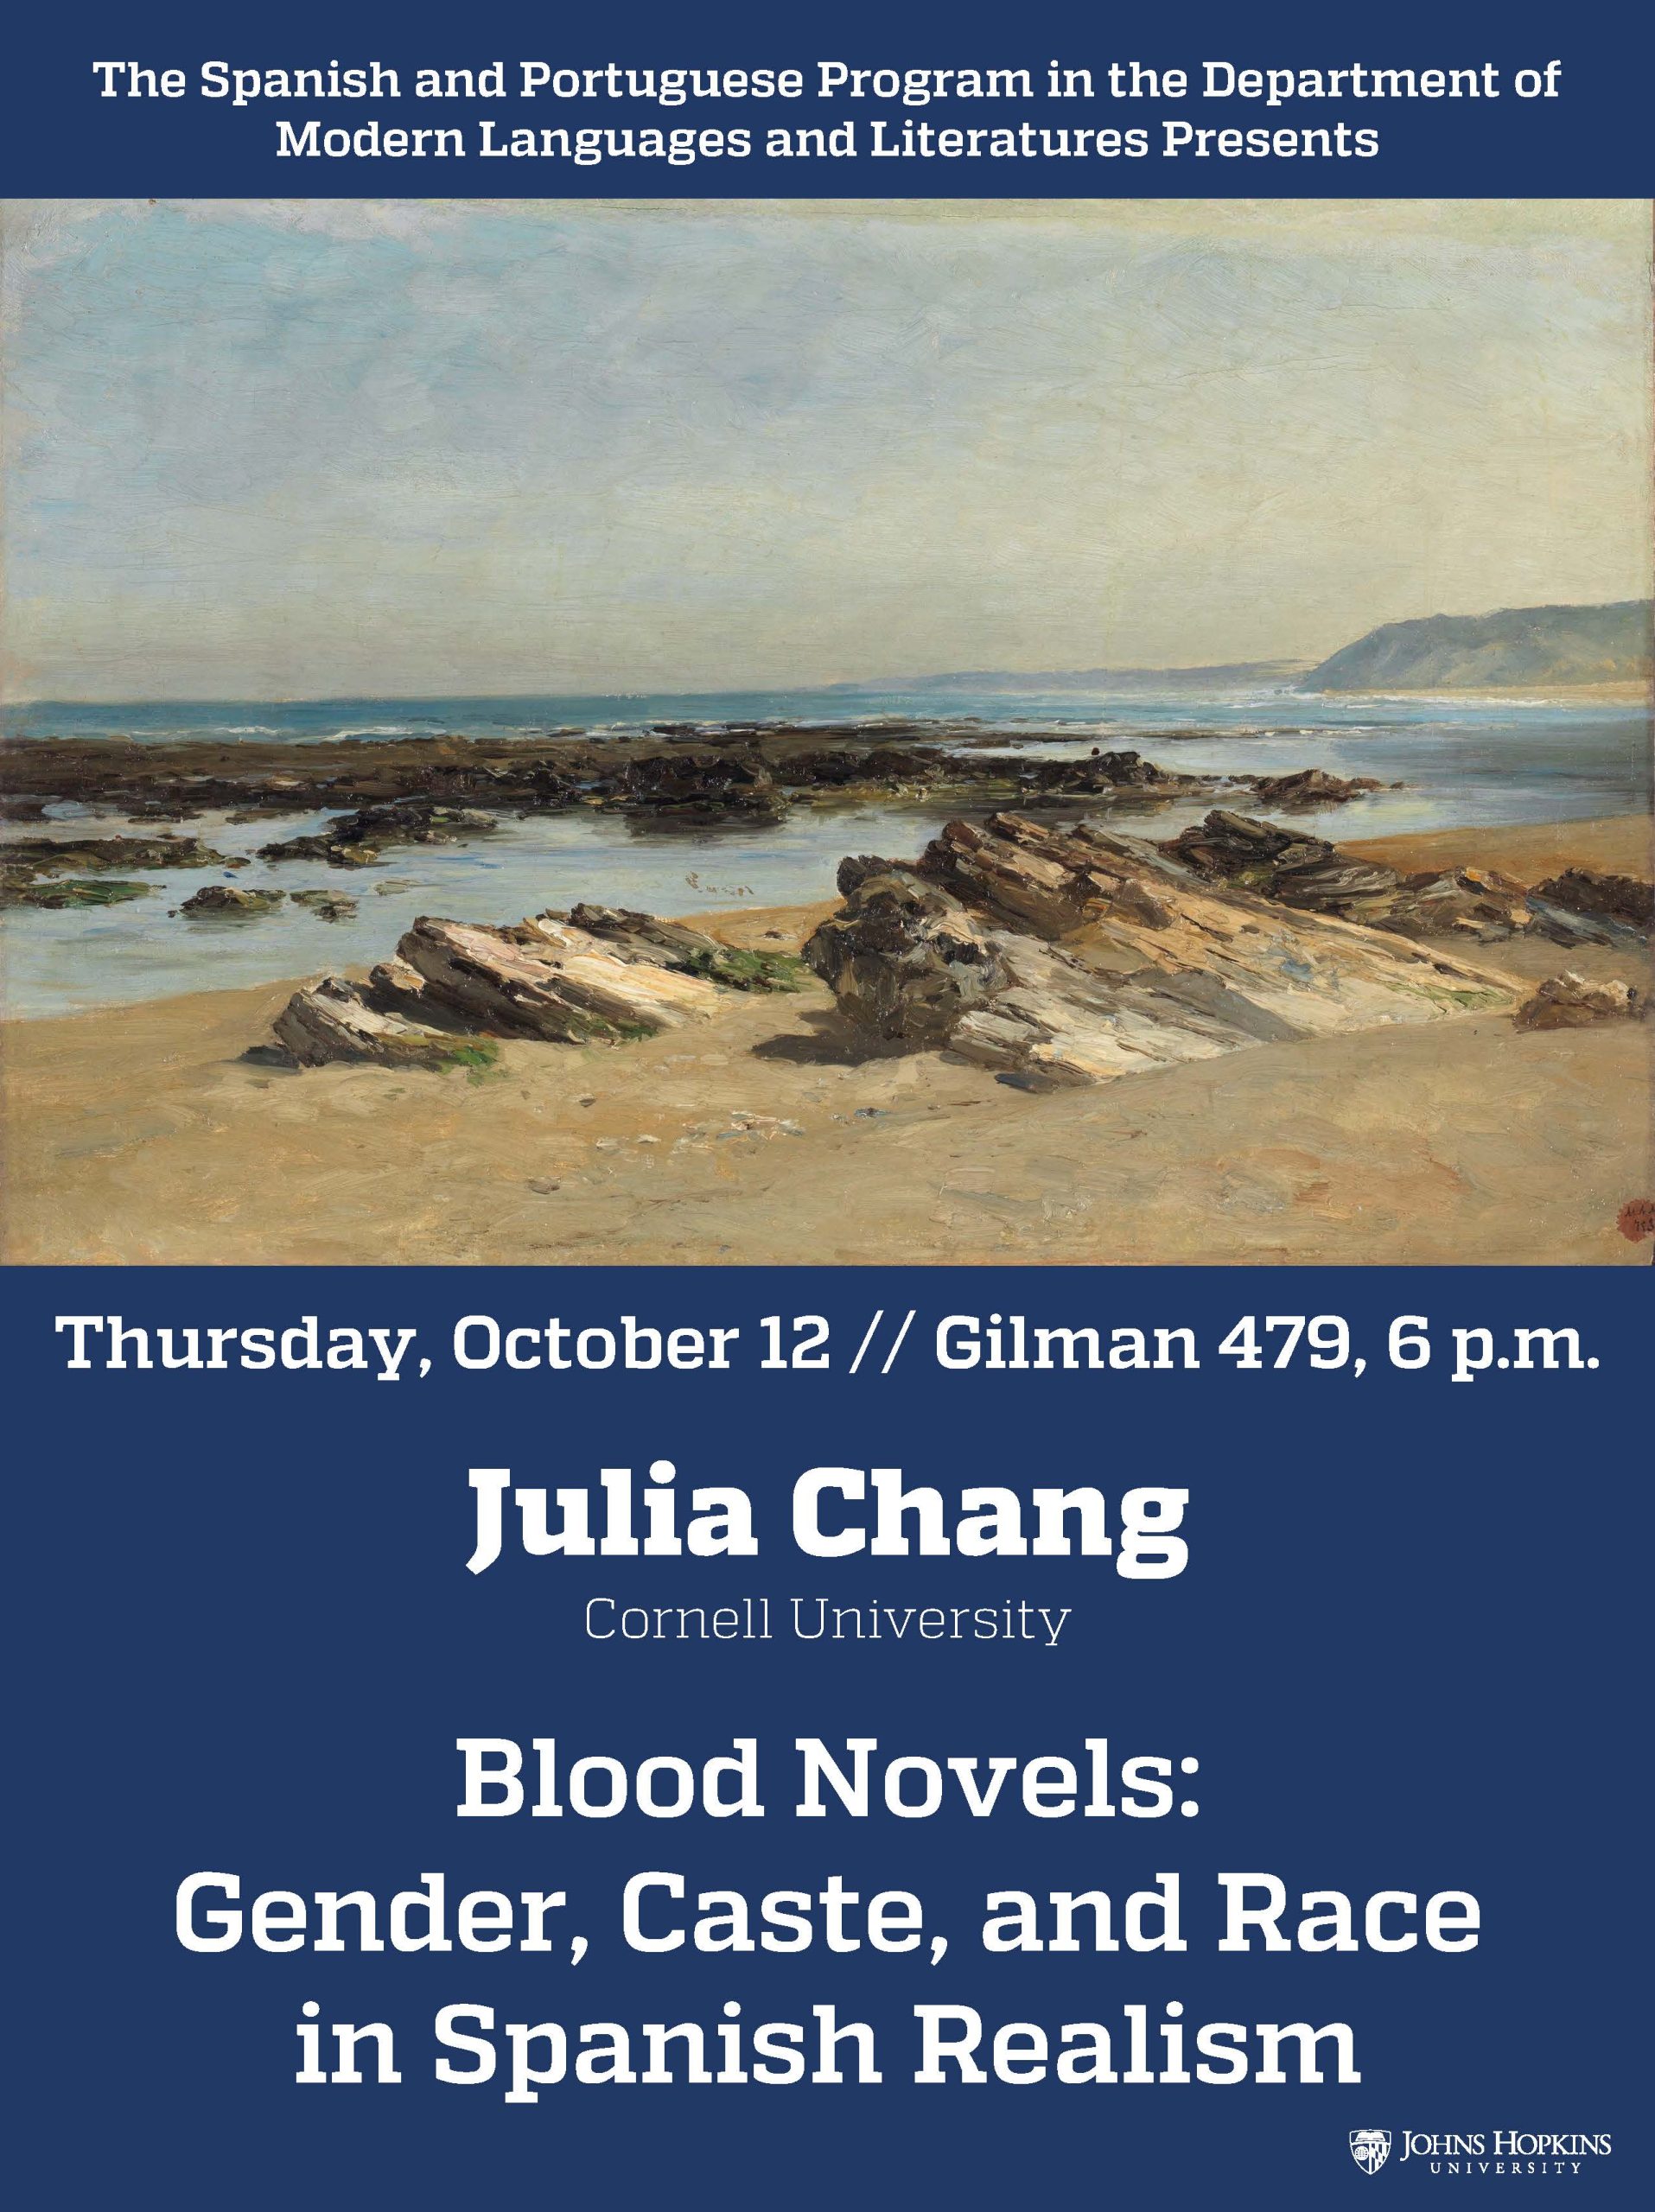 Blood Novels: Gender, Caste, and Race in Spanish Realism